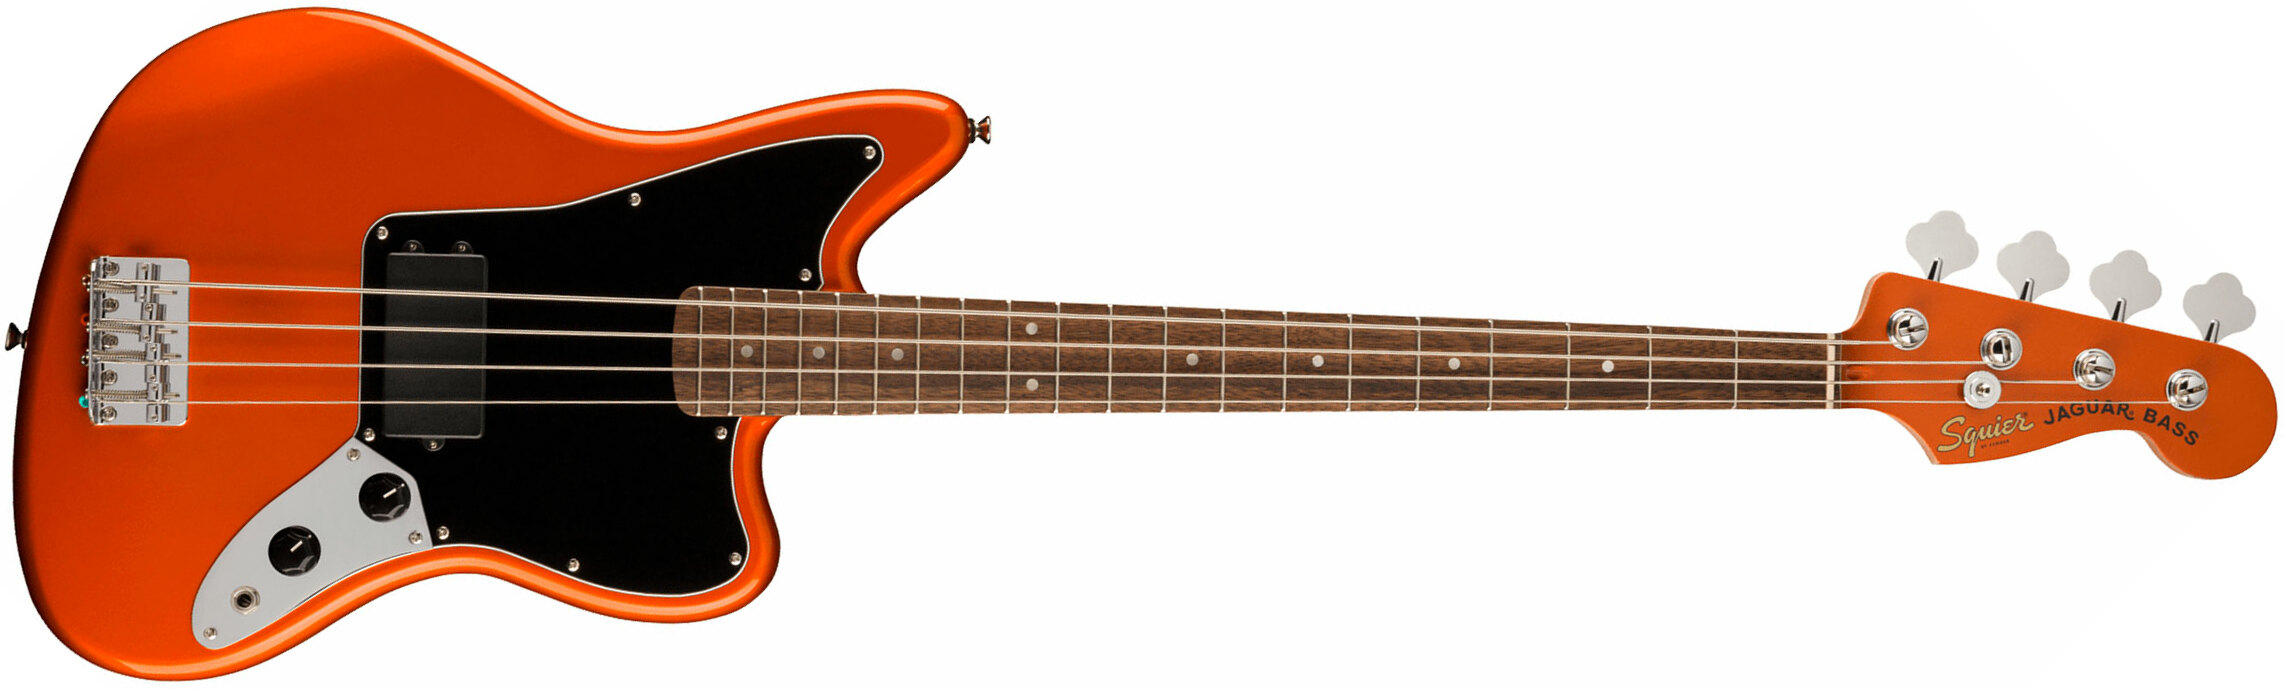 Squier Jaguar Bass H Affinity Fsr Lau - Metallic Orange - Solid body electric bass - Main picture